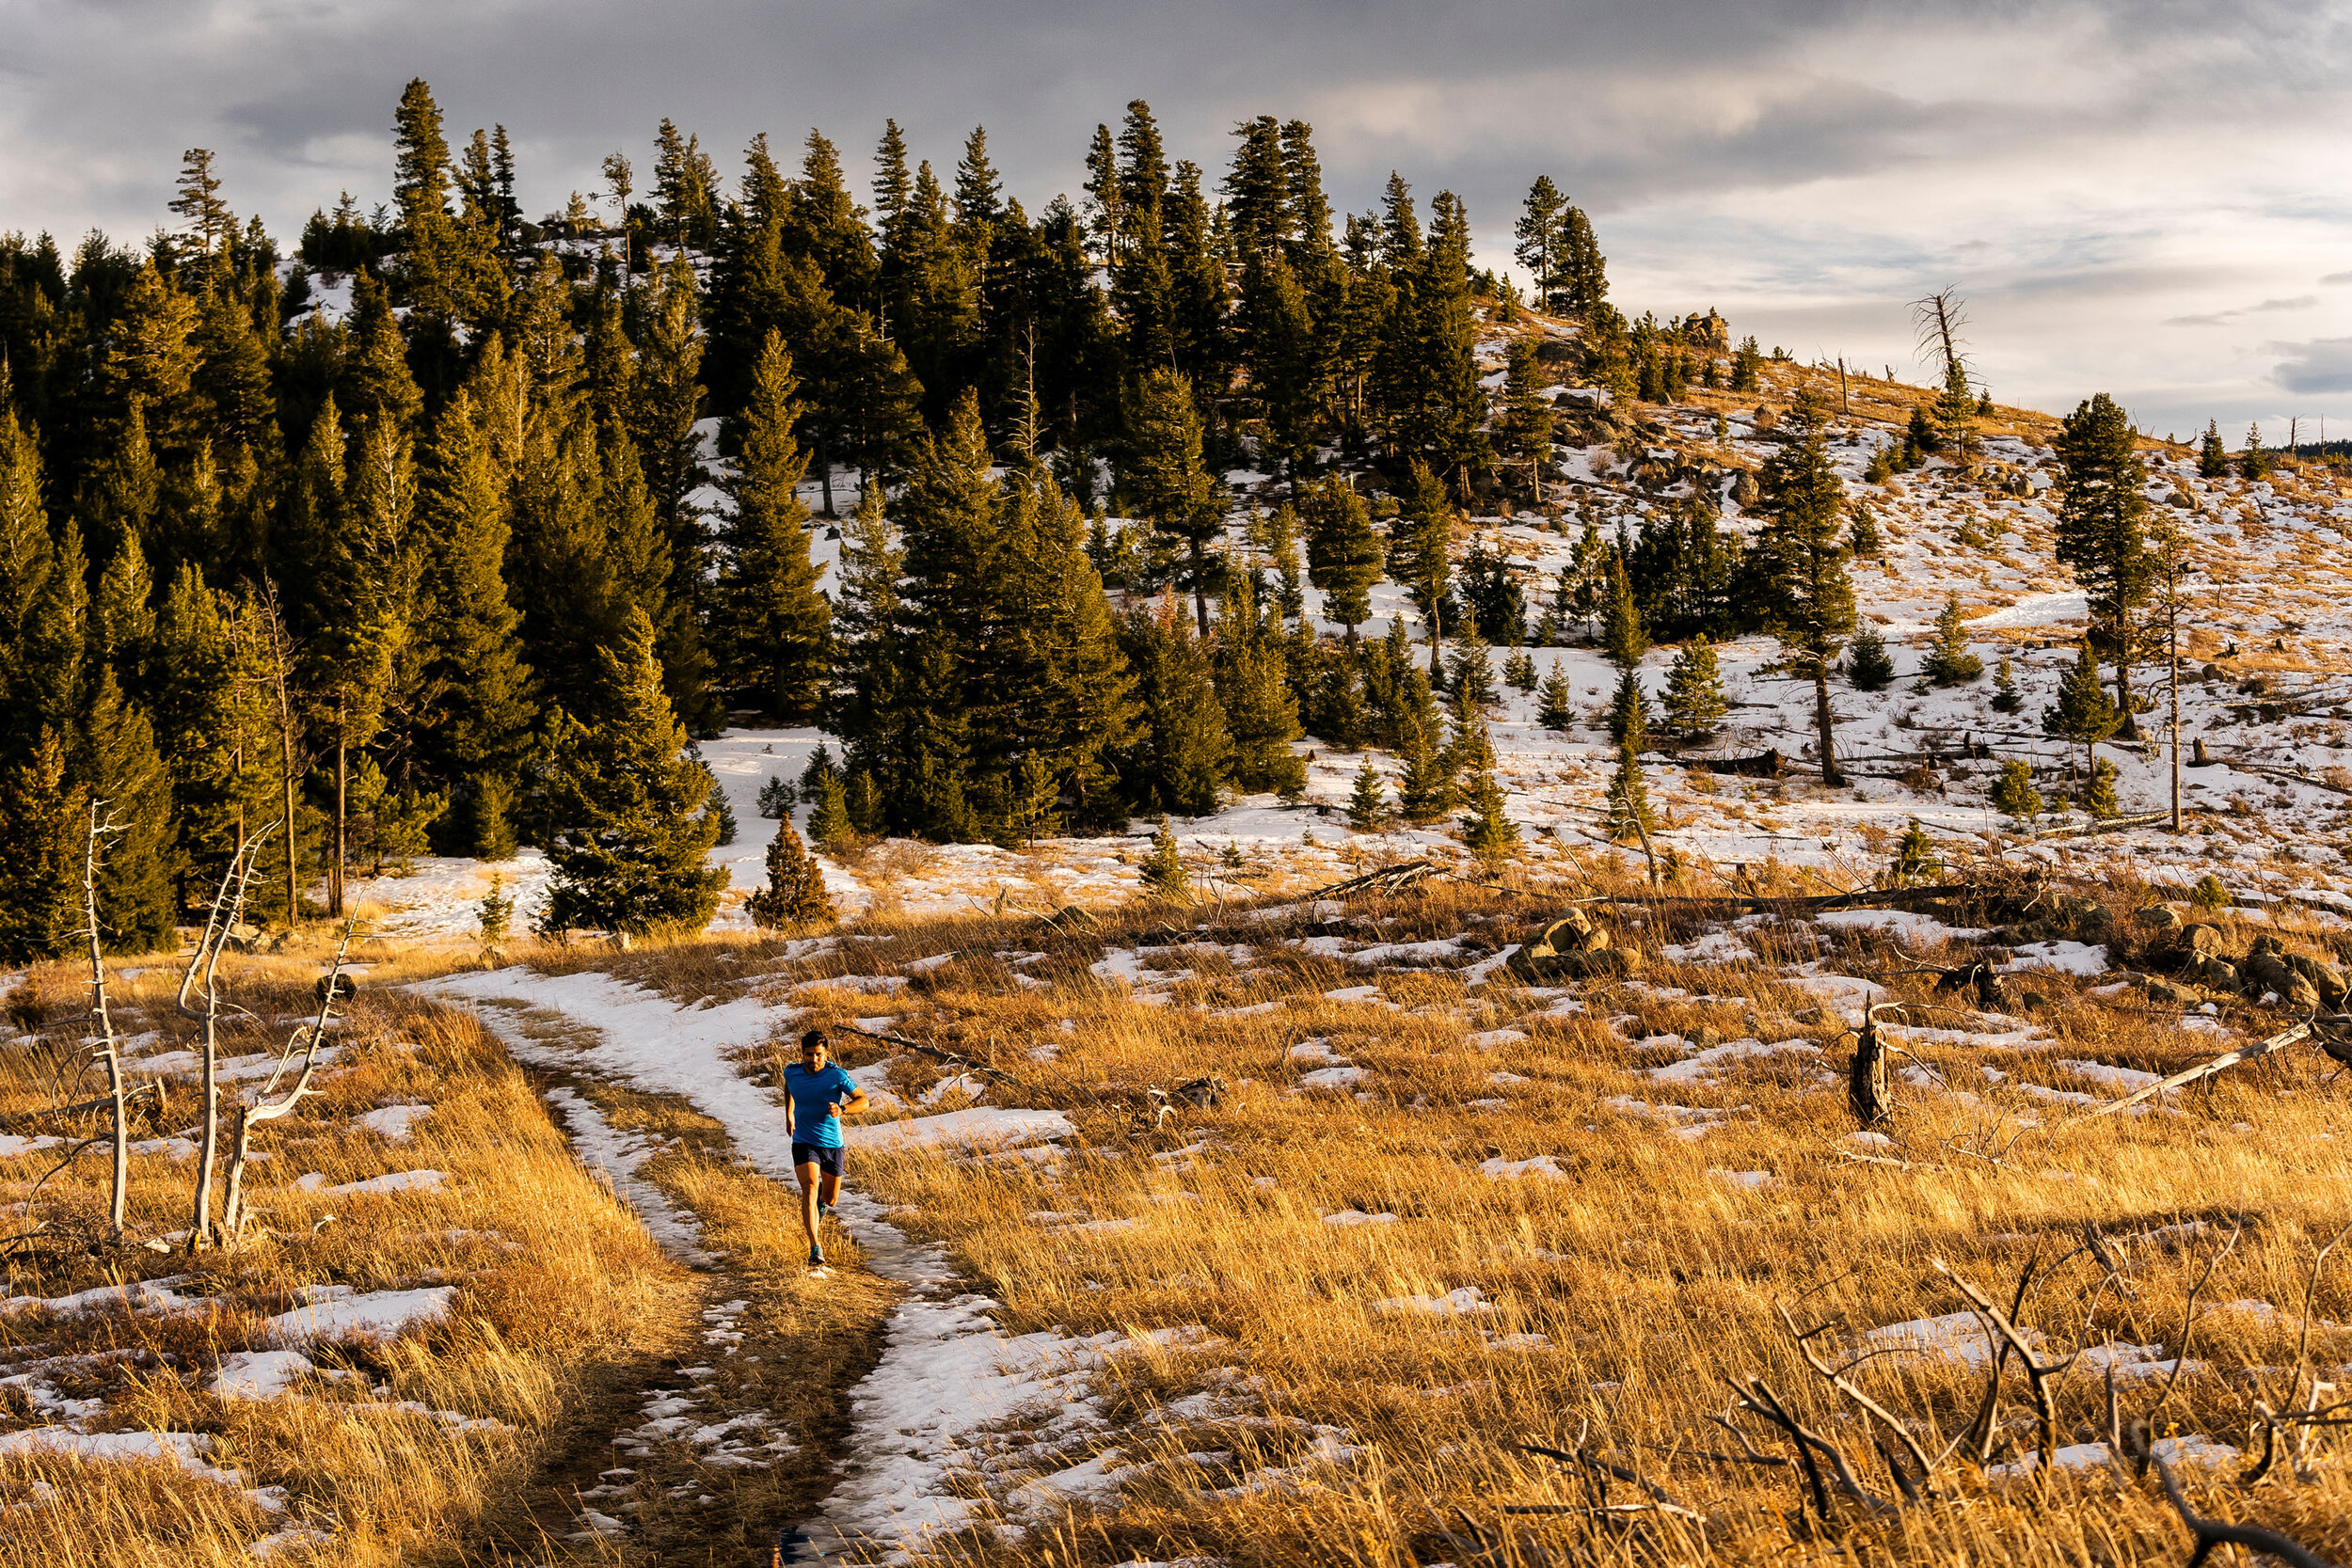  Adventure: Basit Mustafa trail running through the subalpine in winter, Rocky Mountains, Colorado 